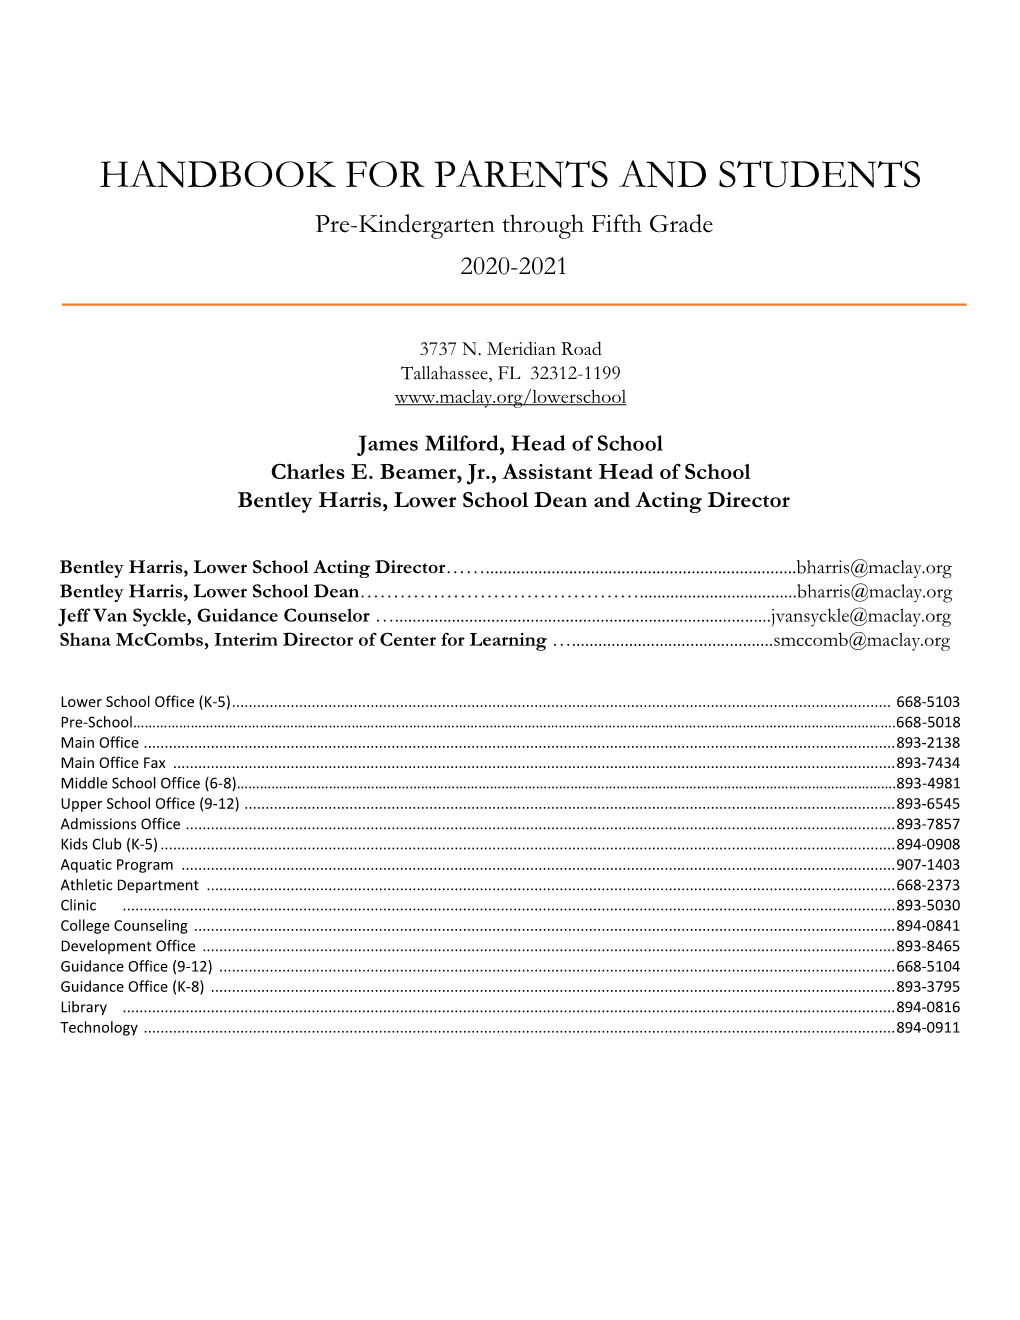 HANDBOOK for PARENTS and STUDENTS Pre-Kindergarten Through Fifth Grade 2020-2021